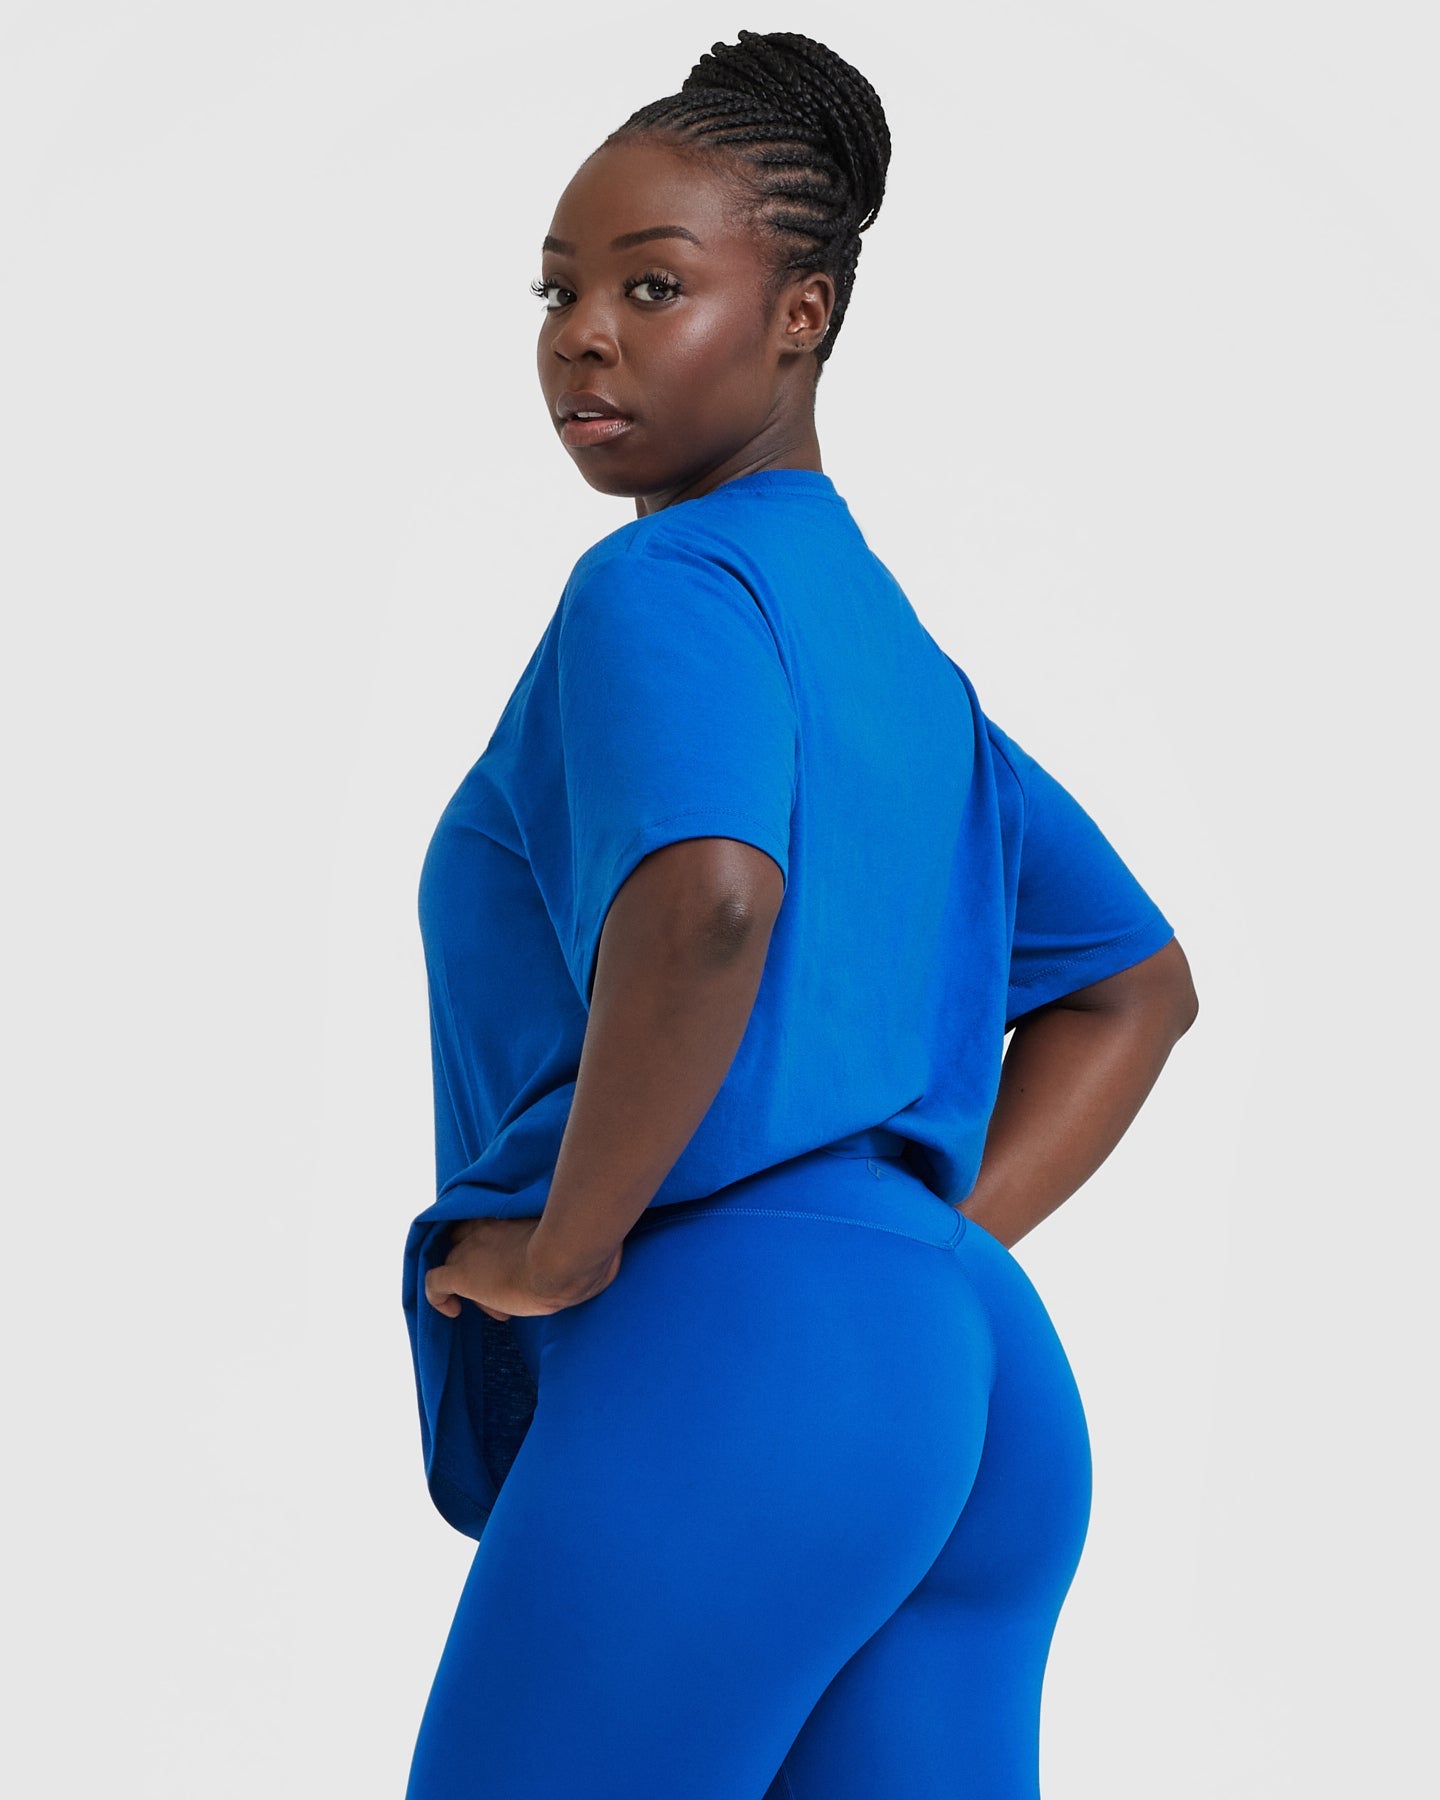 Cobalt Blue T-Shirt Women\'s - Oversized | Oner Active US